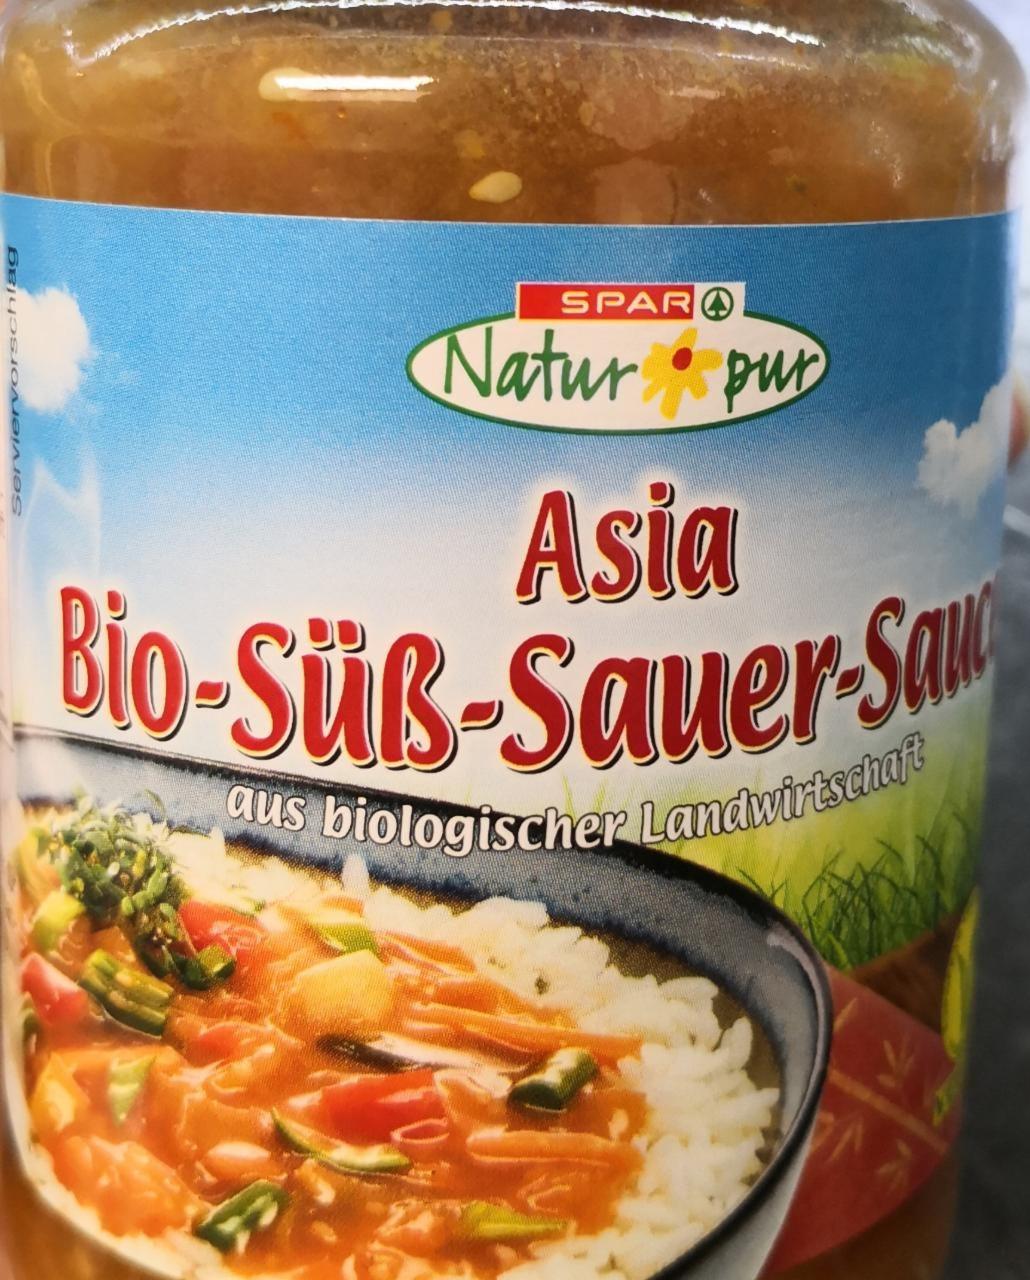 Fotografie - Asia Bio-Süß-Sauer-Sauce Spar Natur pur